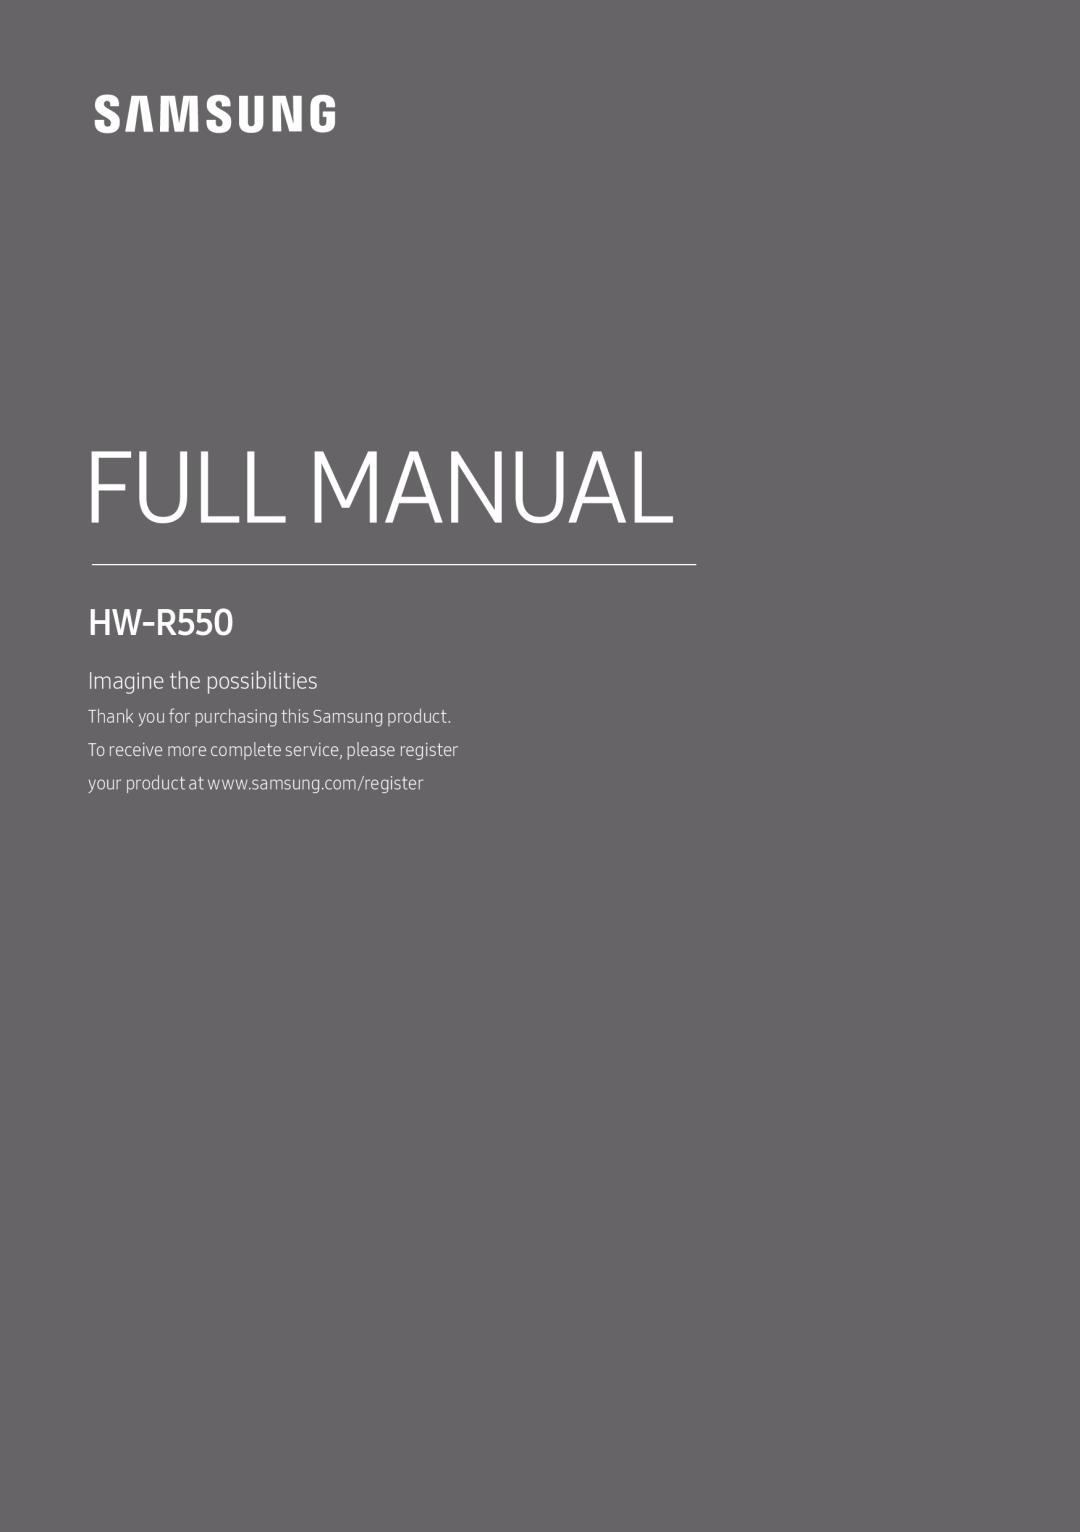 Standard HW-R550